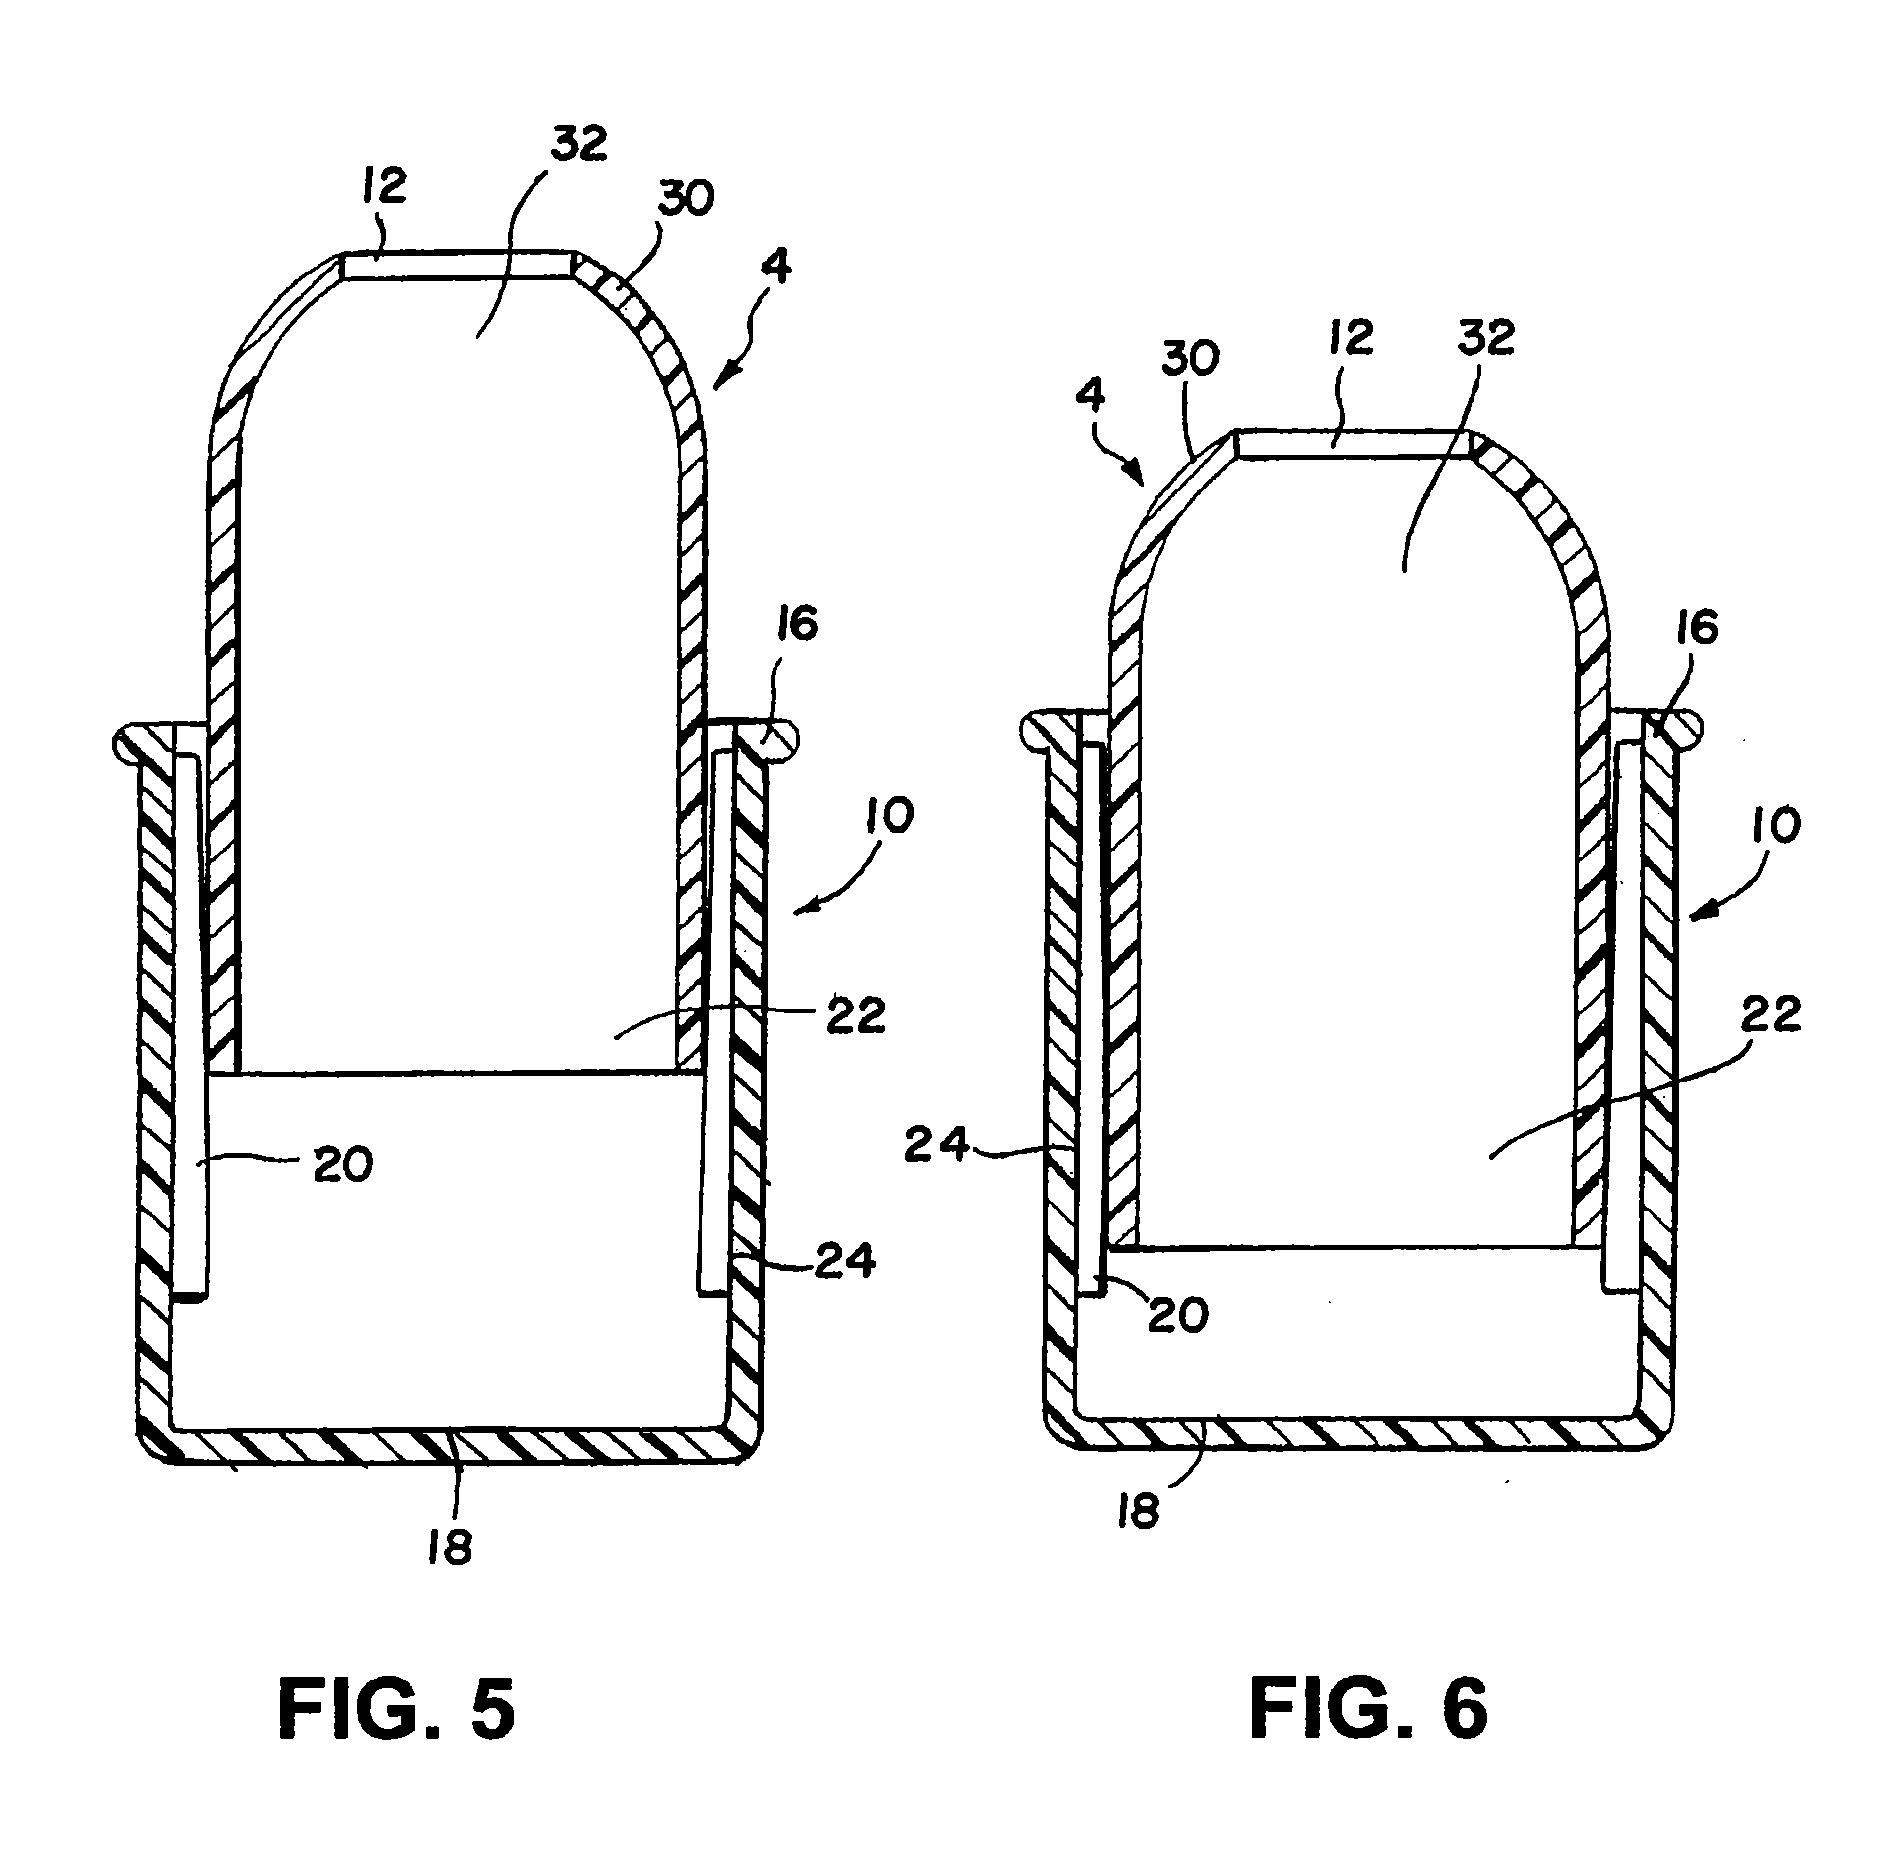 Insulating holder with elastomer foam material